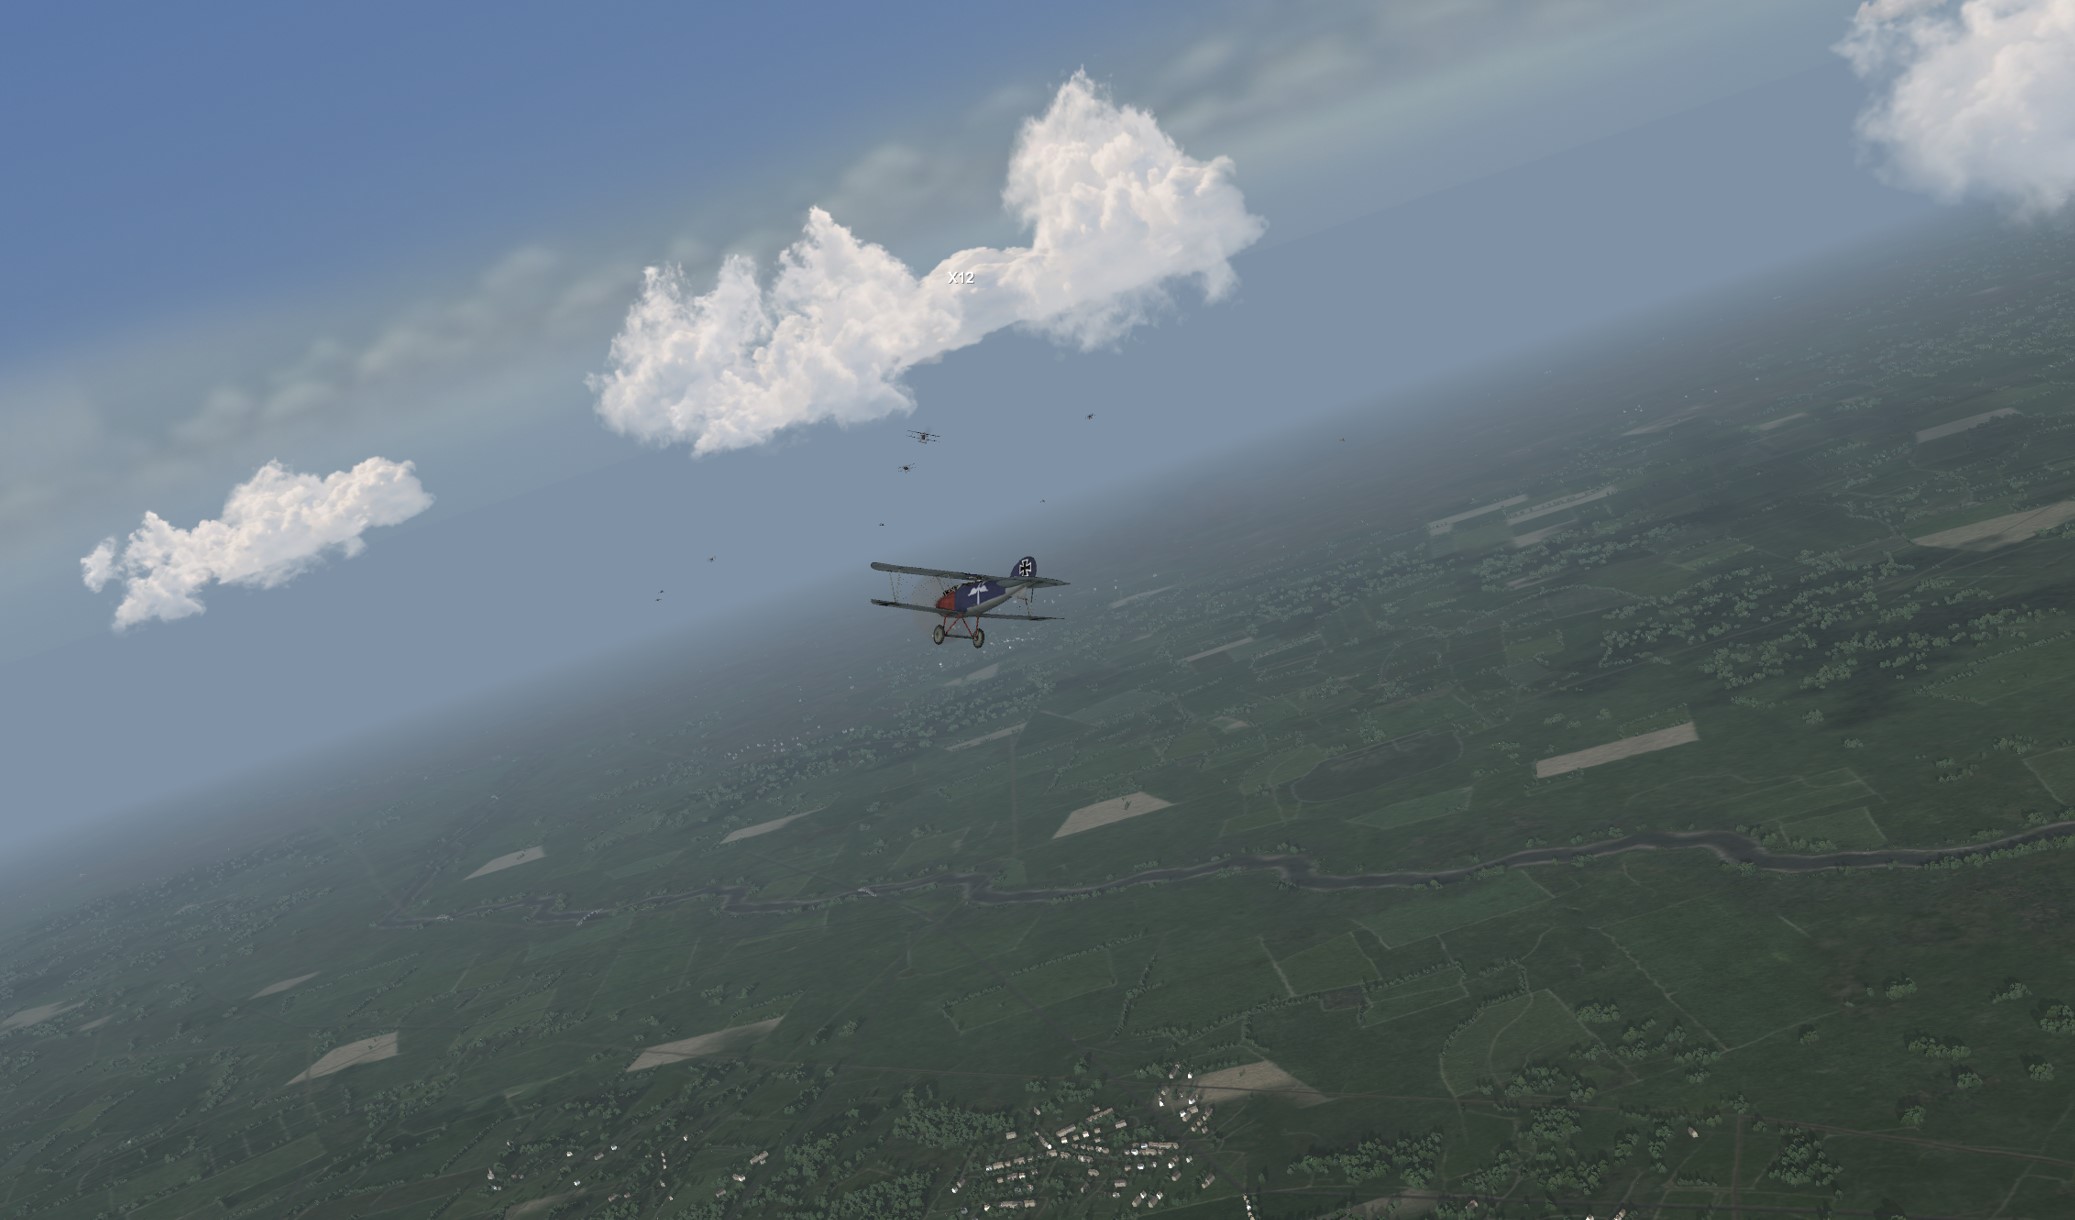 25 Sep Berthold landing a.jpg